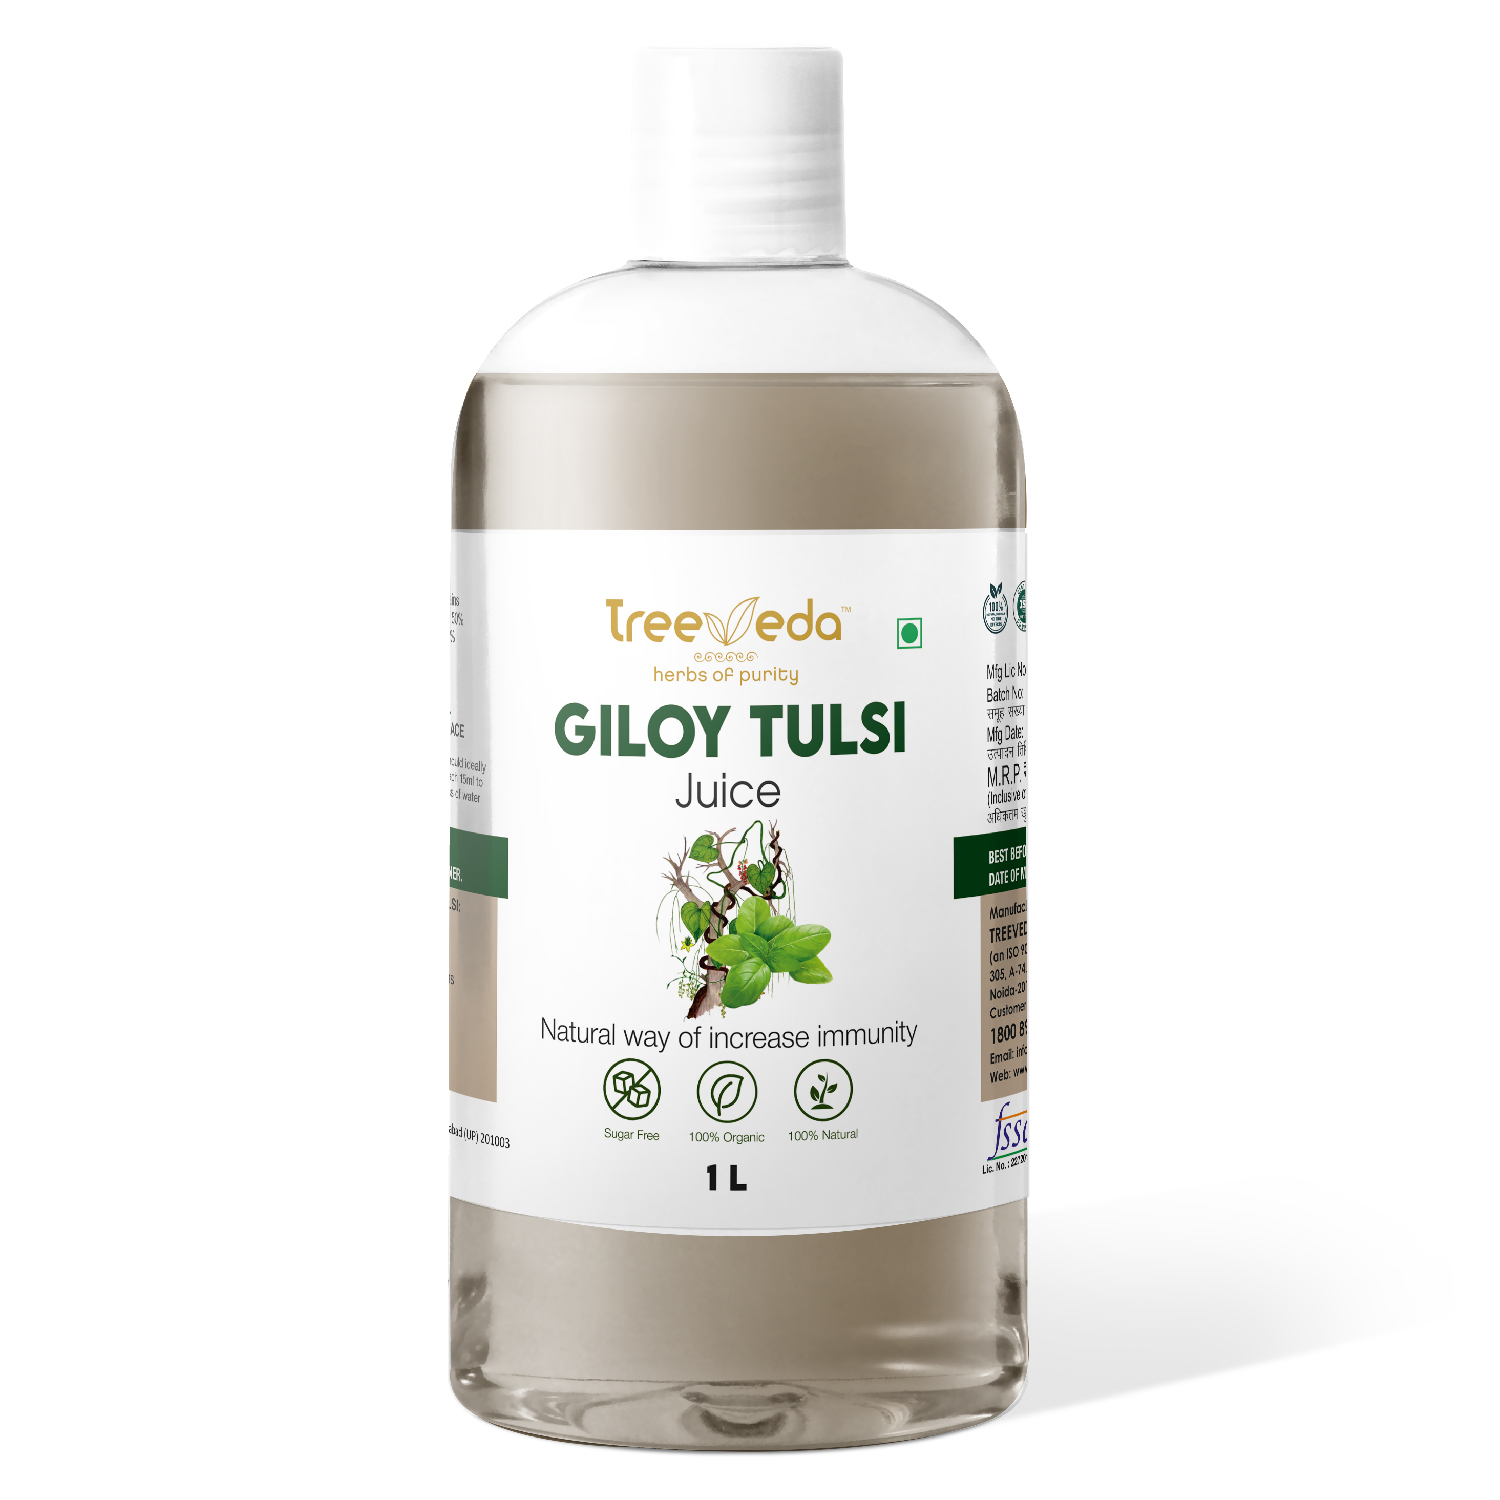 Treeveda Giloy Tulsi Juice